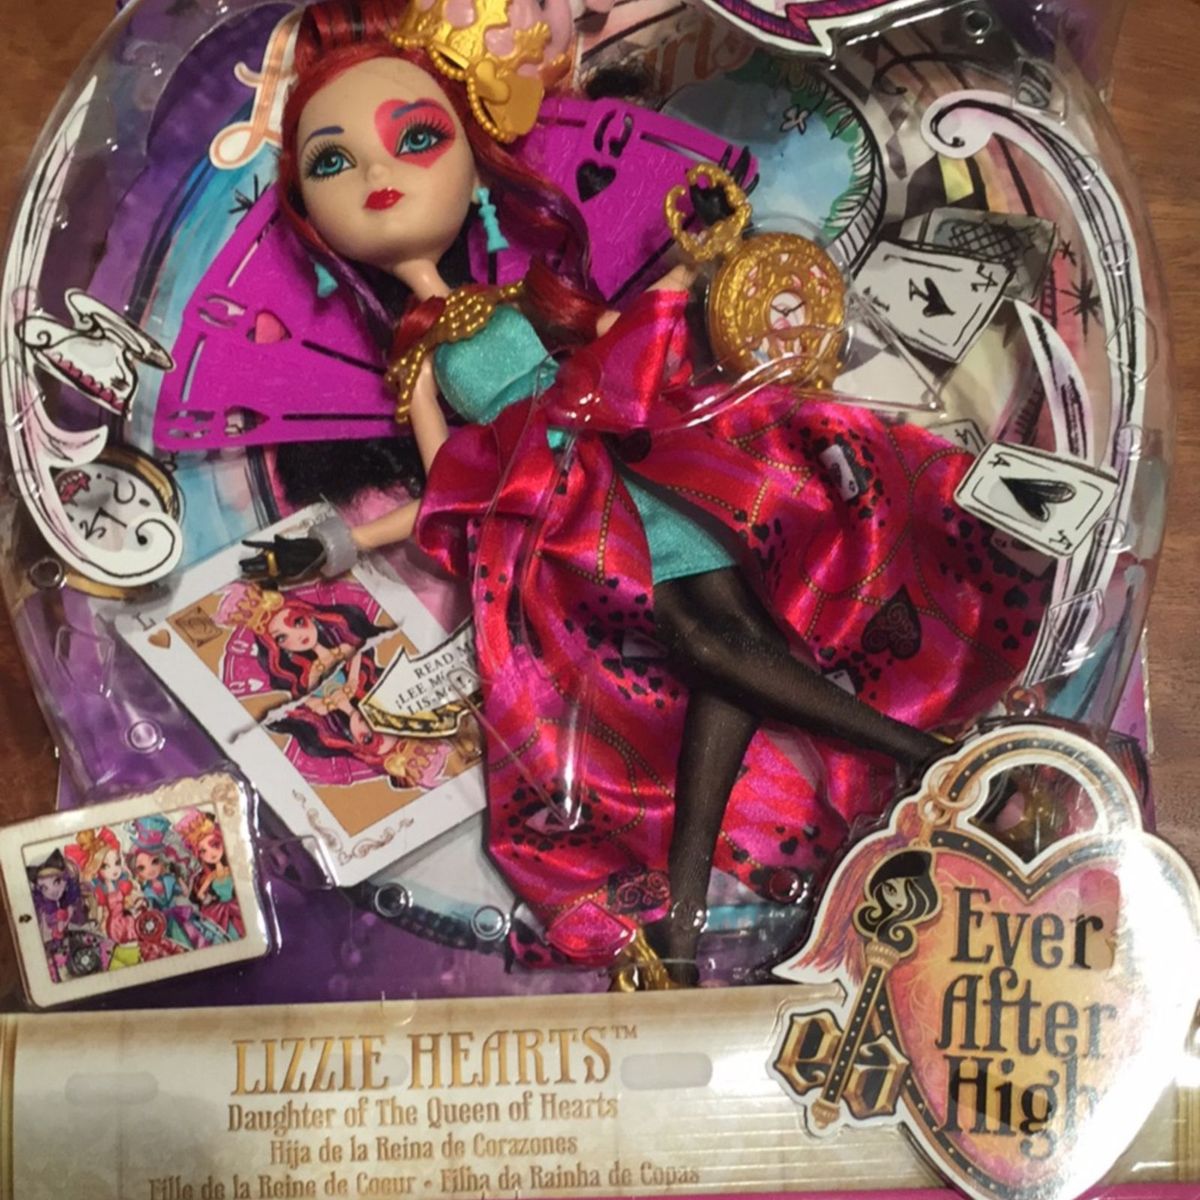 Boneca Ever After High Lizzie Hearts, Brinquedo Mattel Usado 44817524